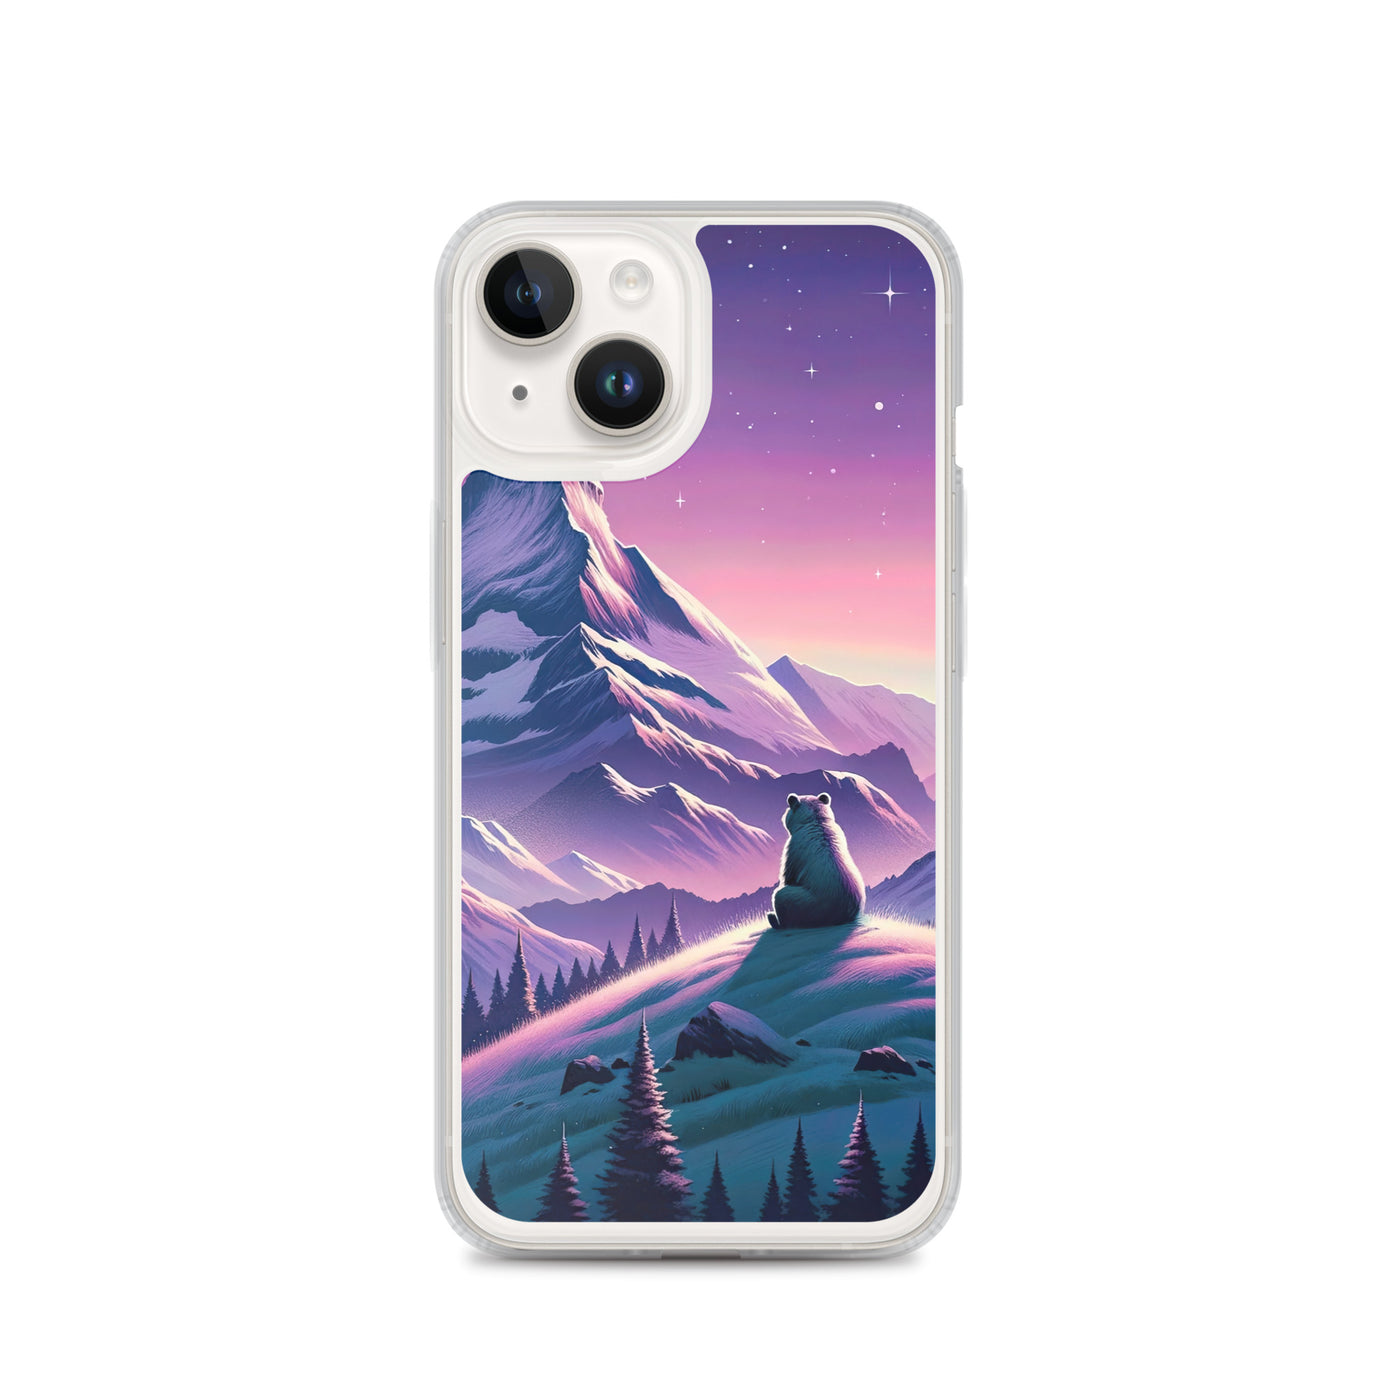 Bezaubernder Alpenabend mit Bär, lavendel-rosafarbener Himmel (AN) - iPhone Schutzhülle (durchsichtig) xxx yyy zzz iPhone 14